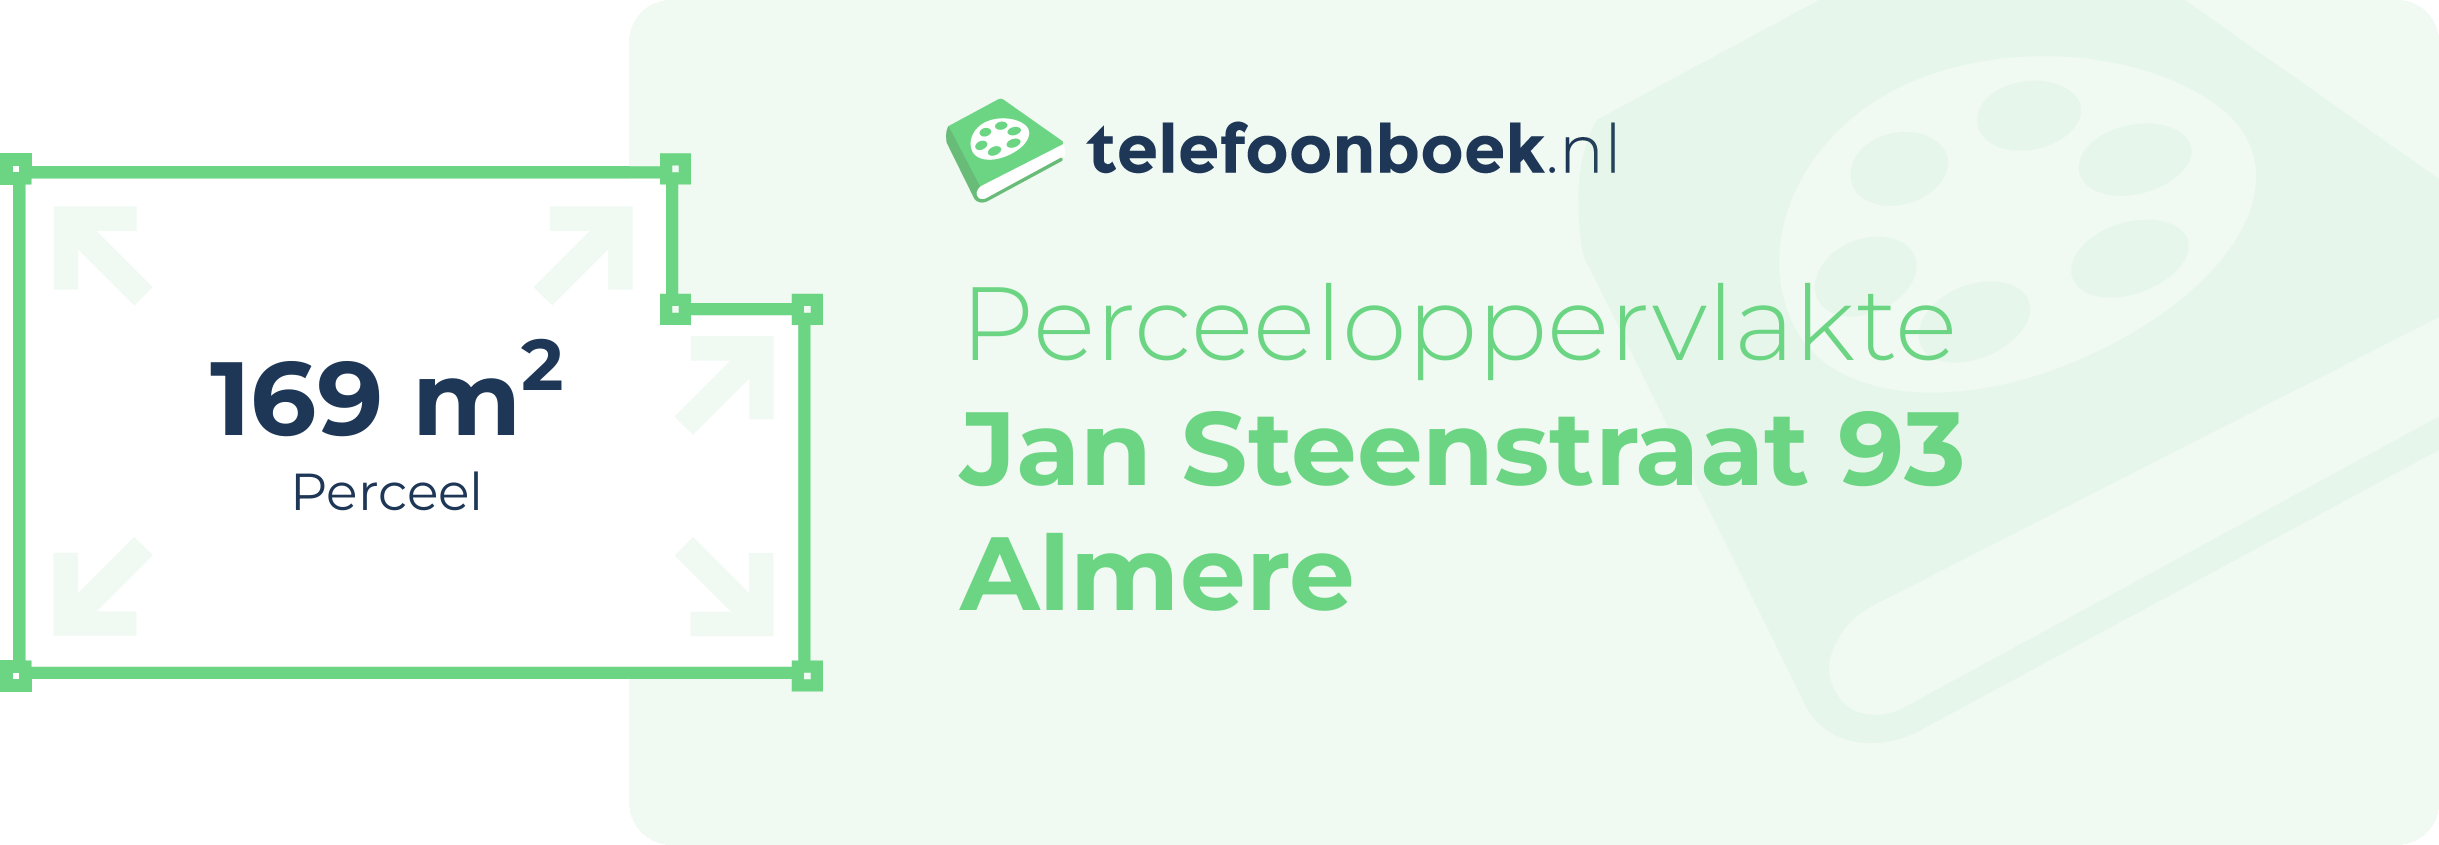 Perceeloppervlakte Jan Steenstraat 93 Almere